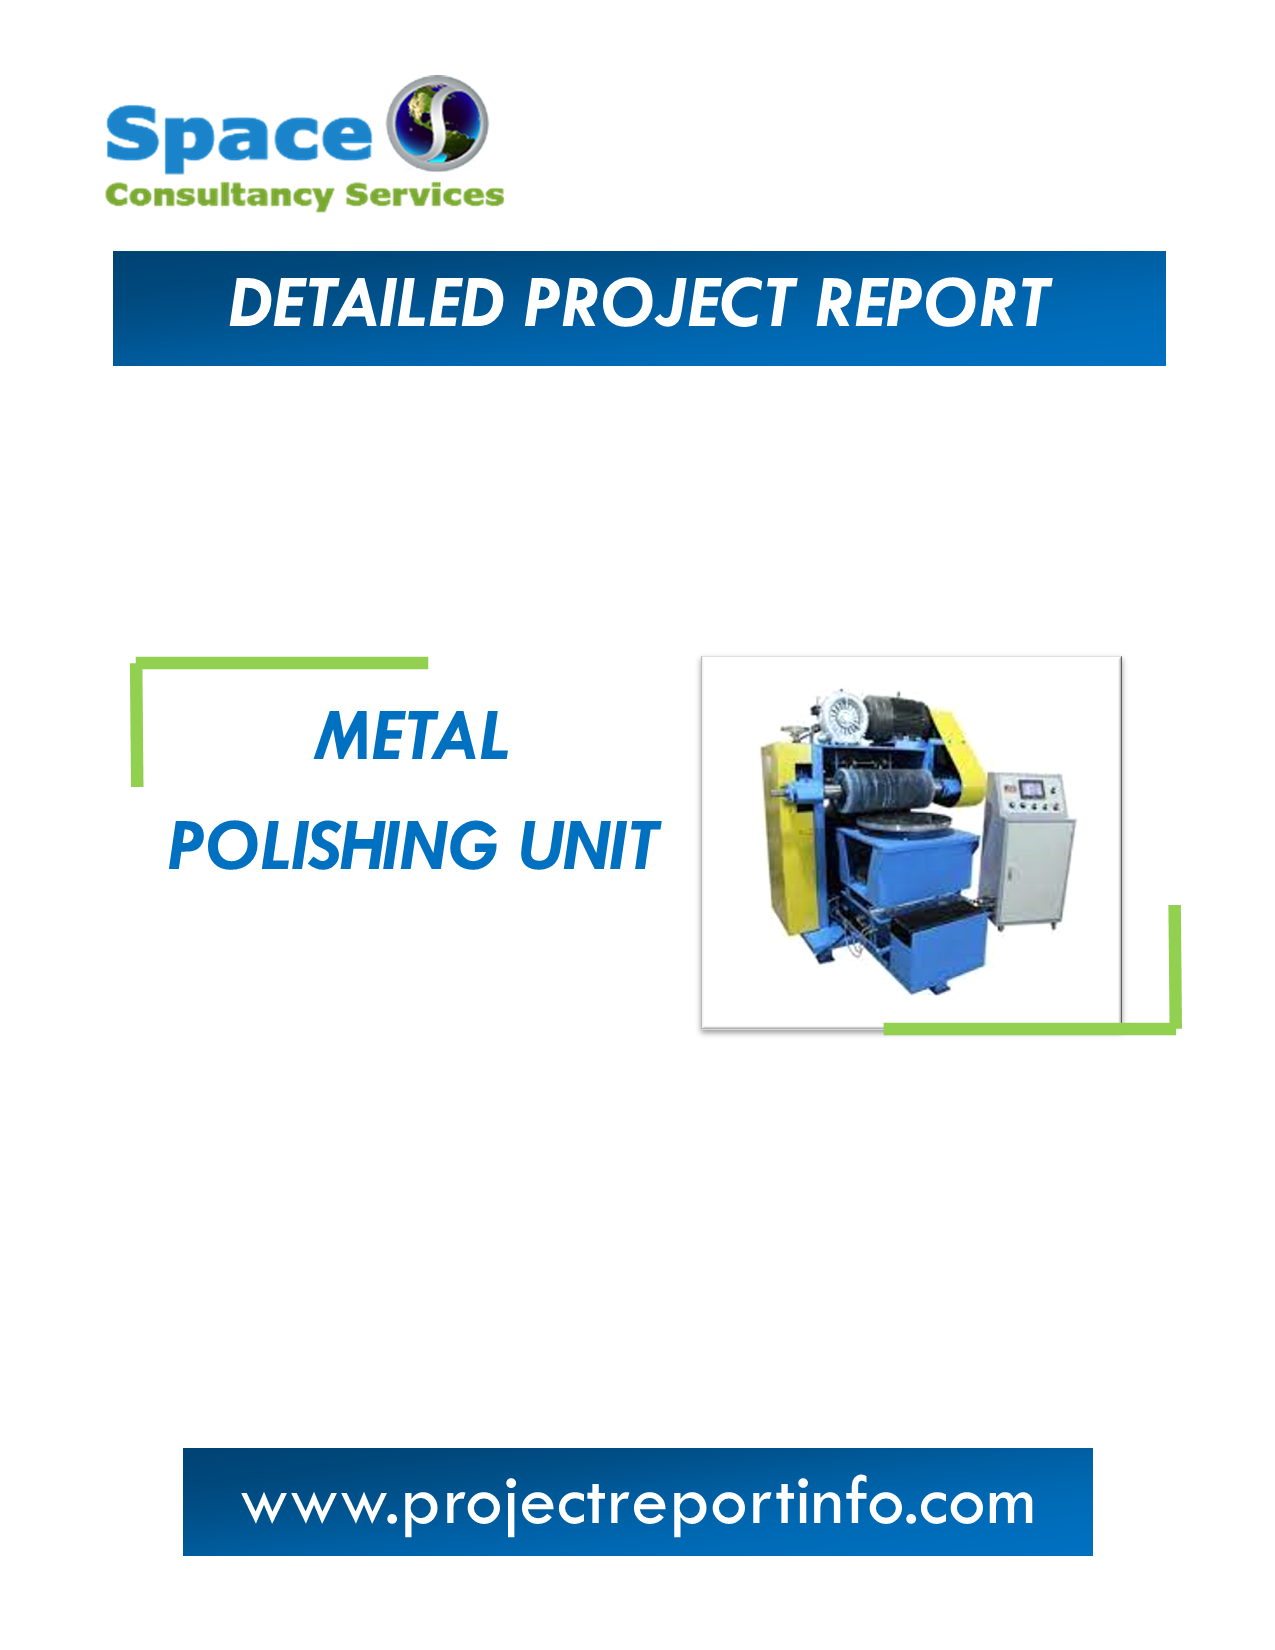 Project Report on Metal Polishing Unit